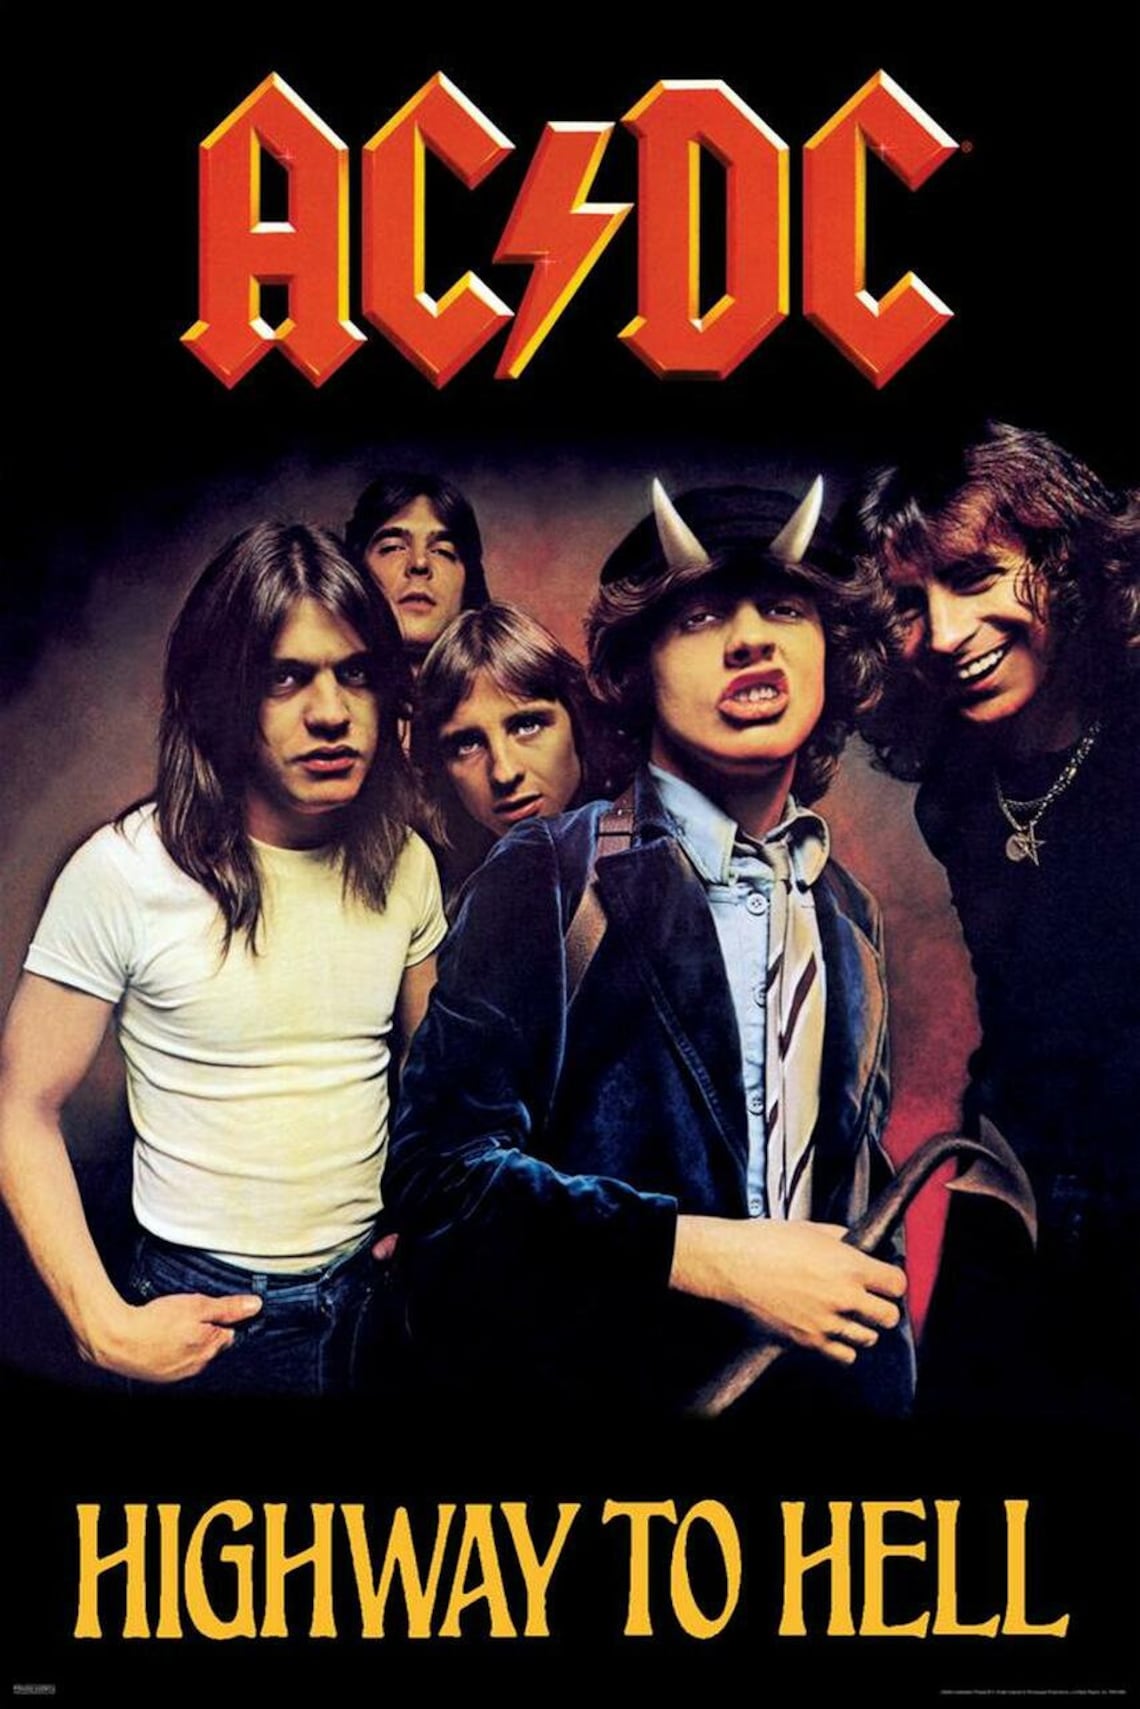 Retro AC DC Concert Poster Etsy